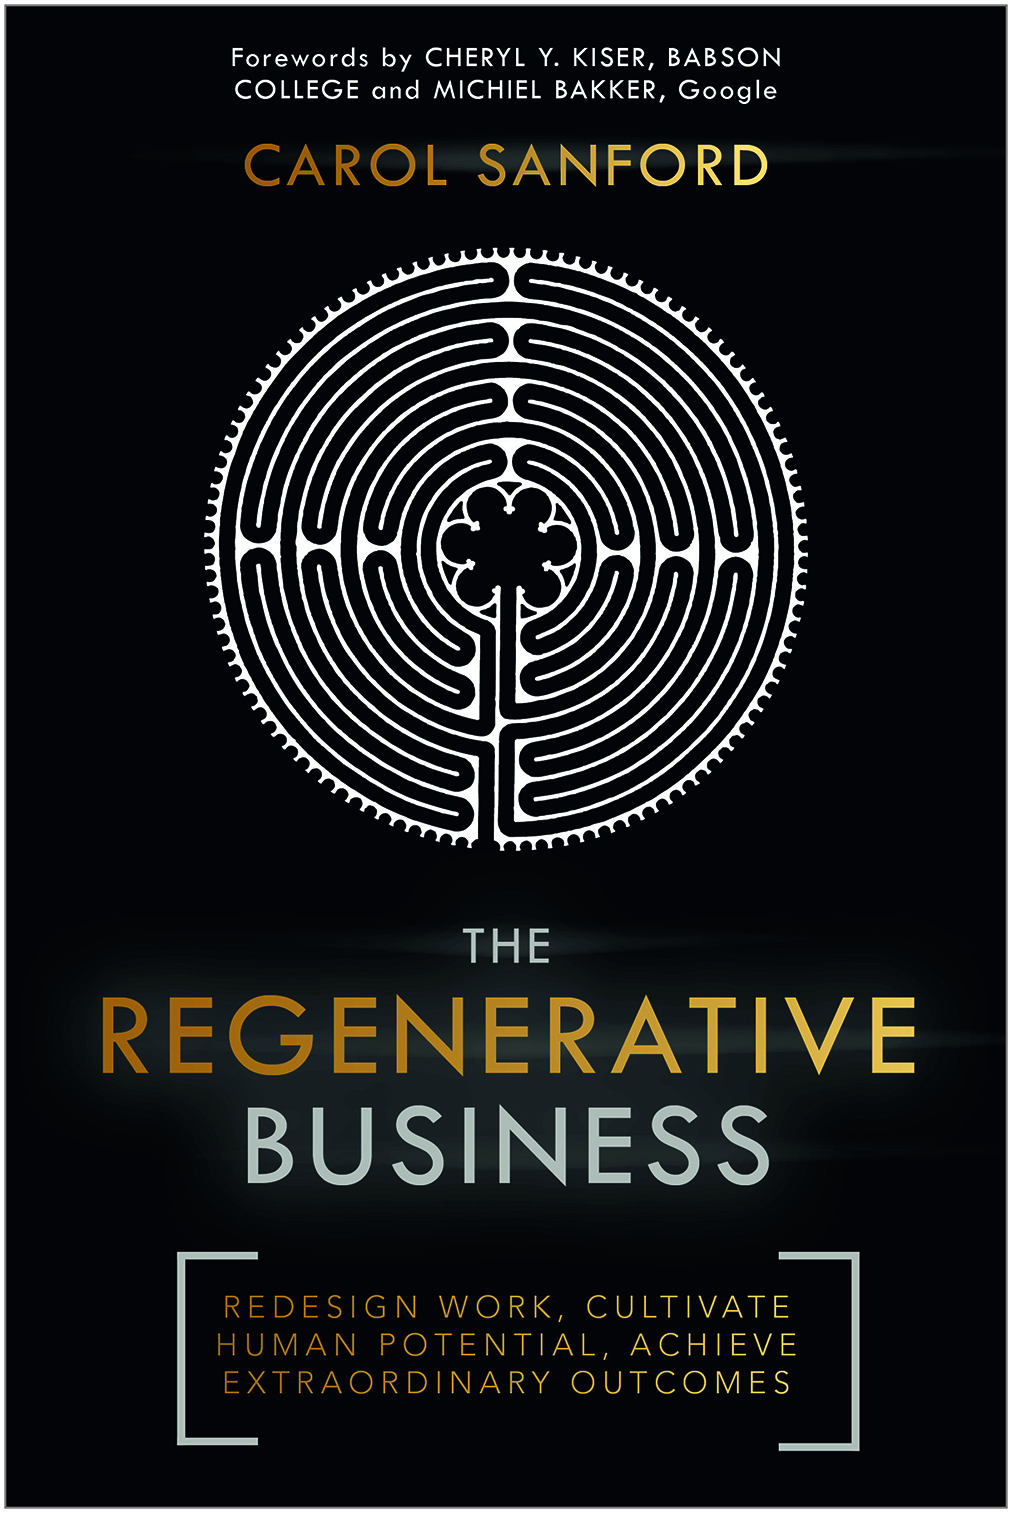 The Regenerative Business by Carol Sanford